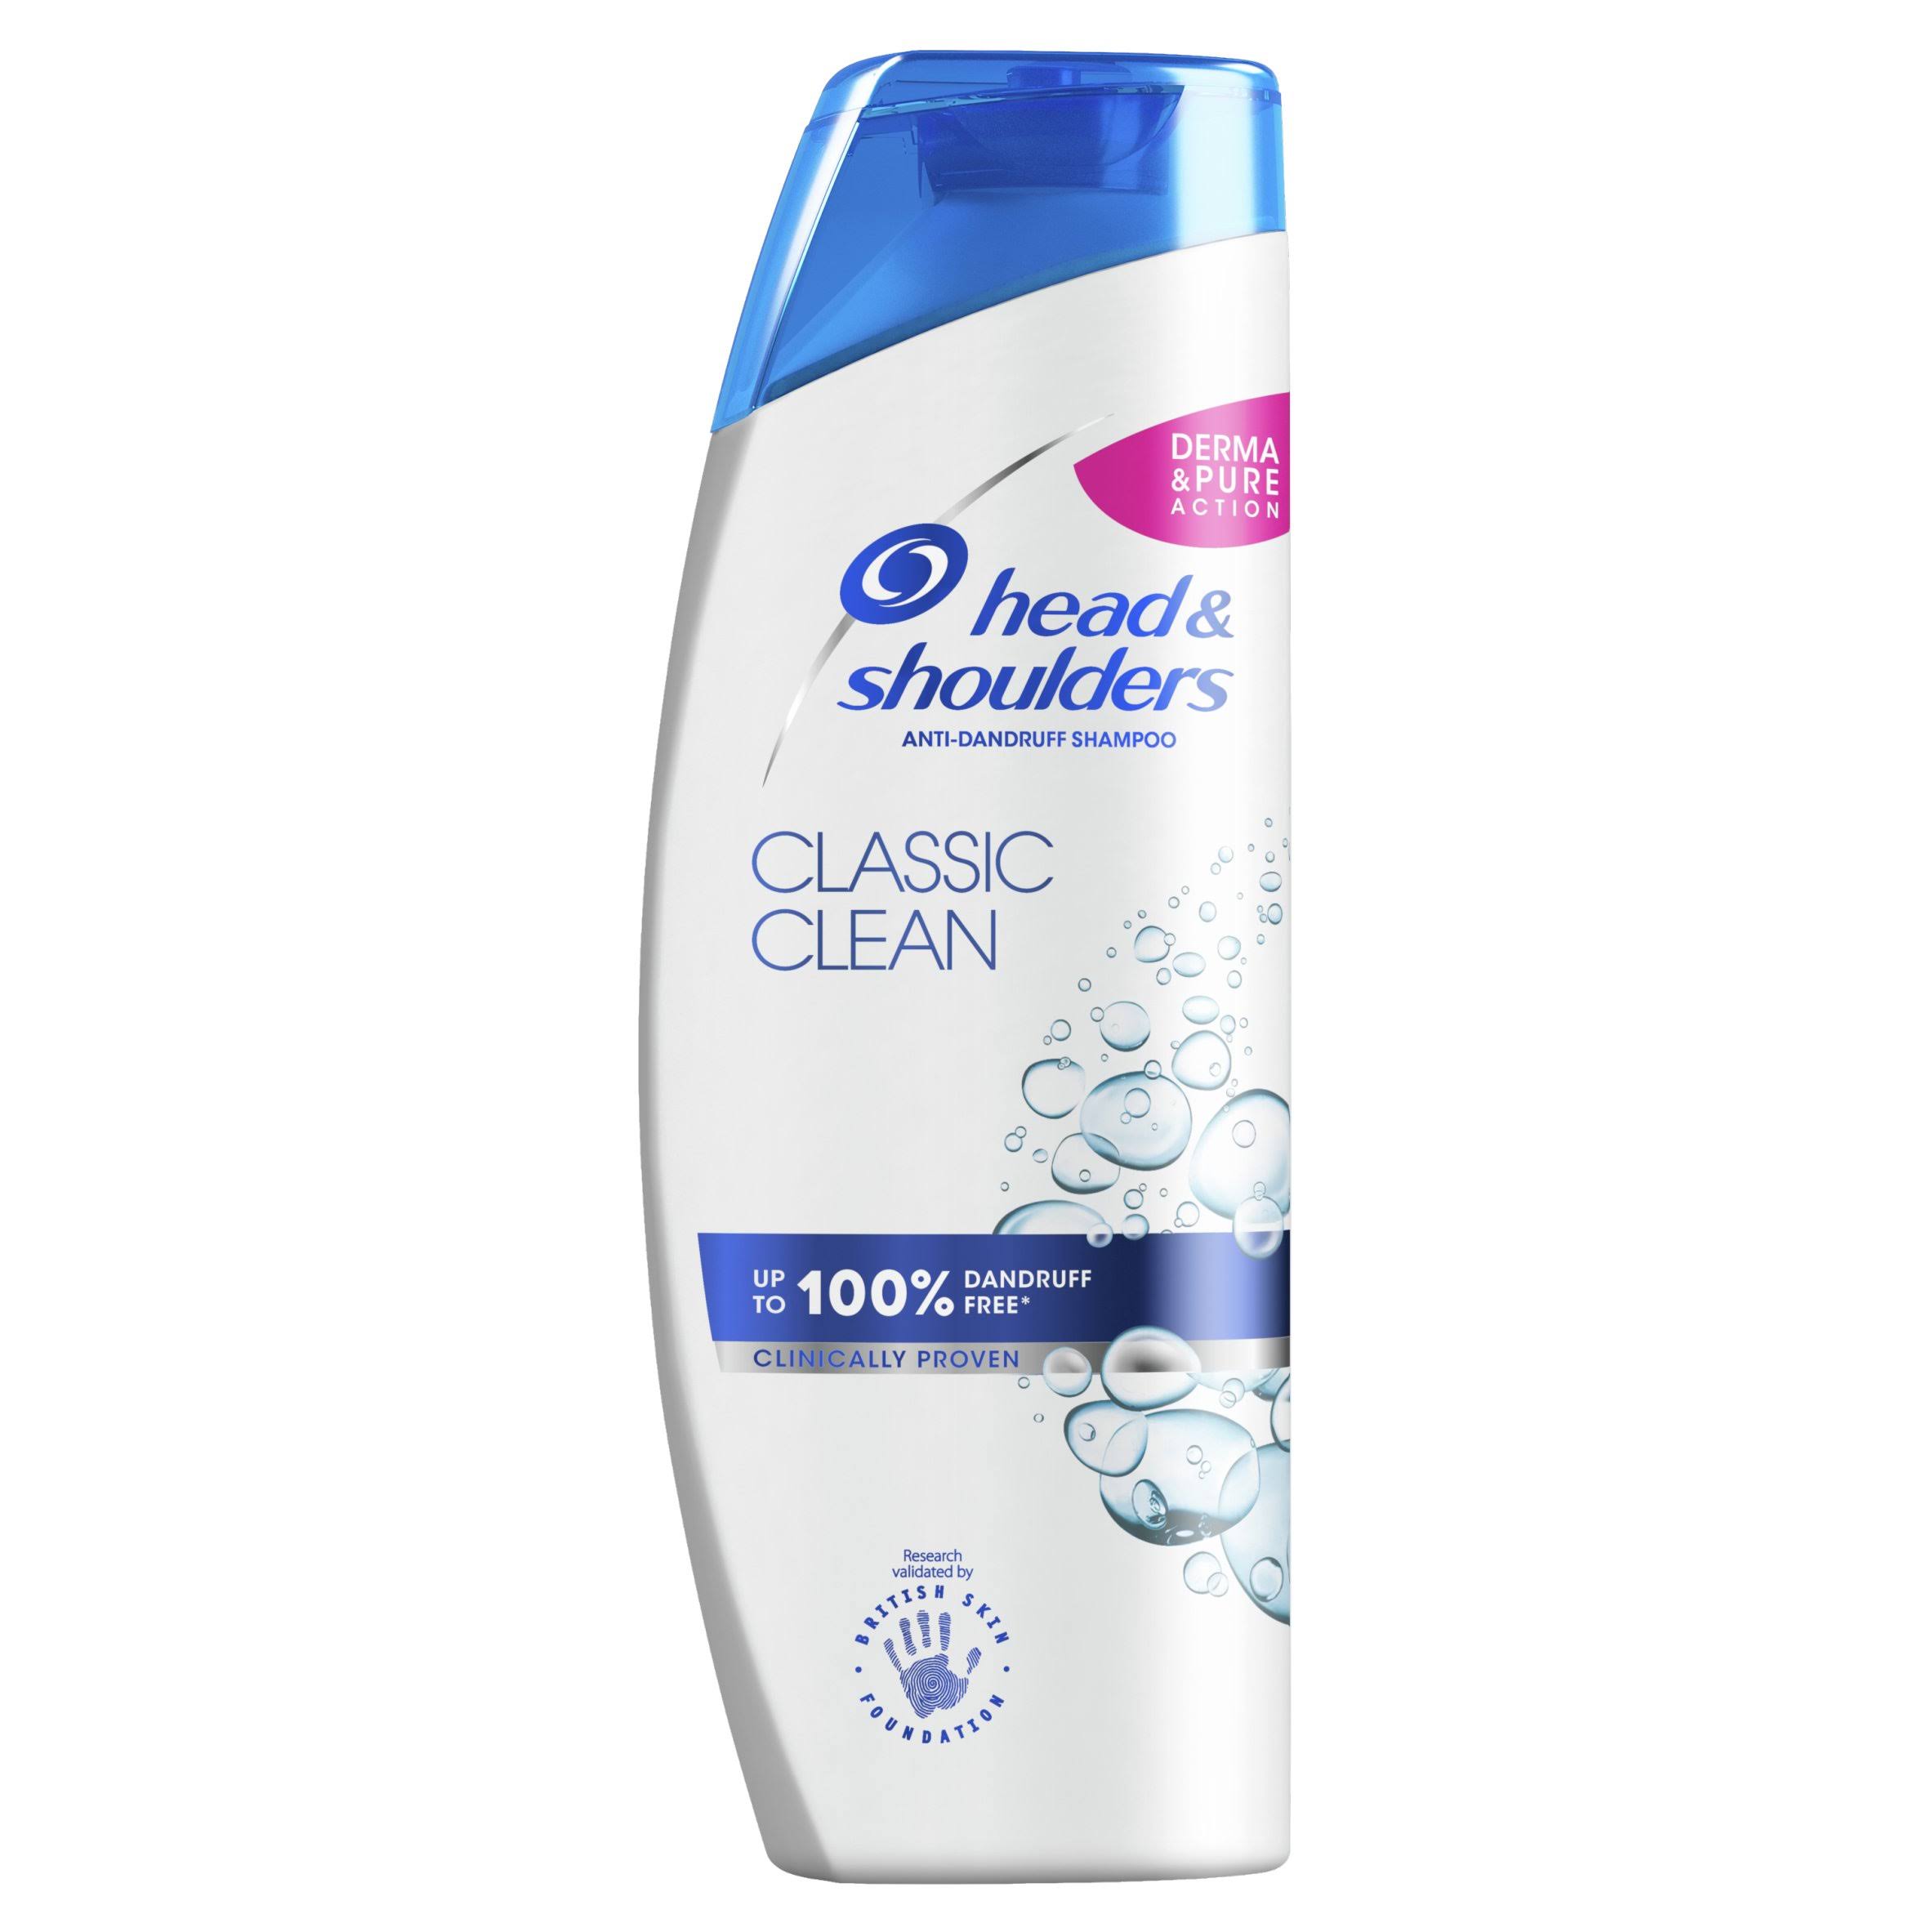 Head & Shoulders Classic Clean Anti-Dandruff Shampoo 400ml